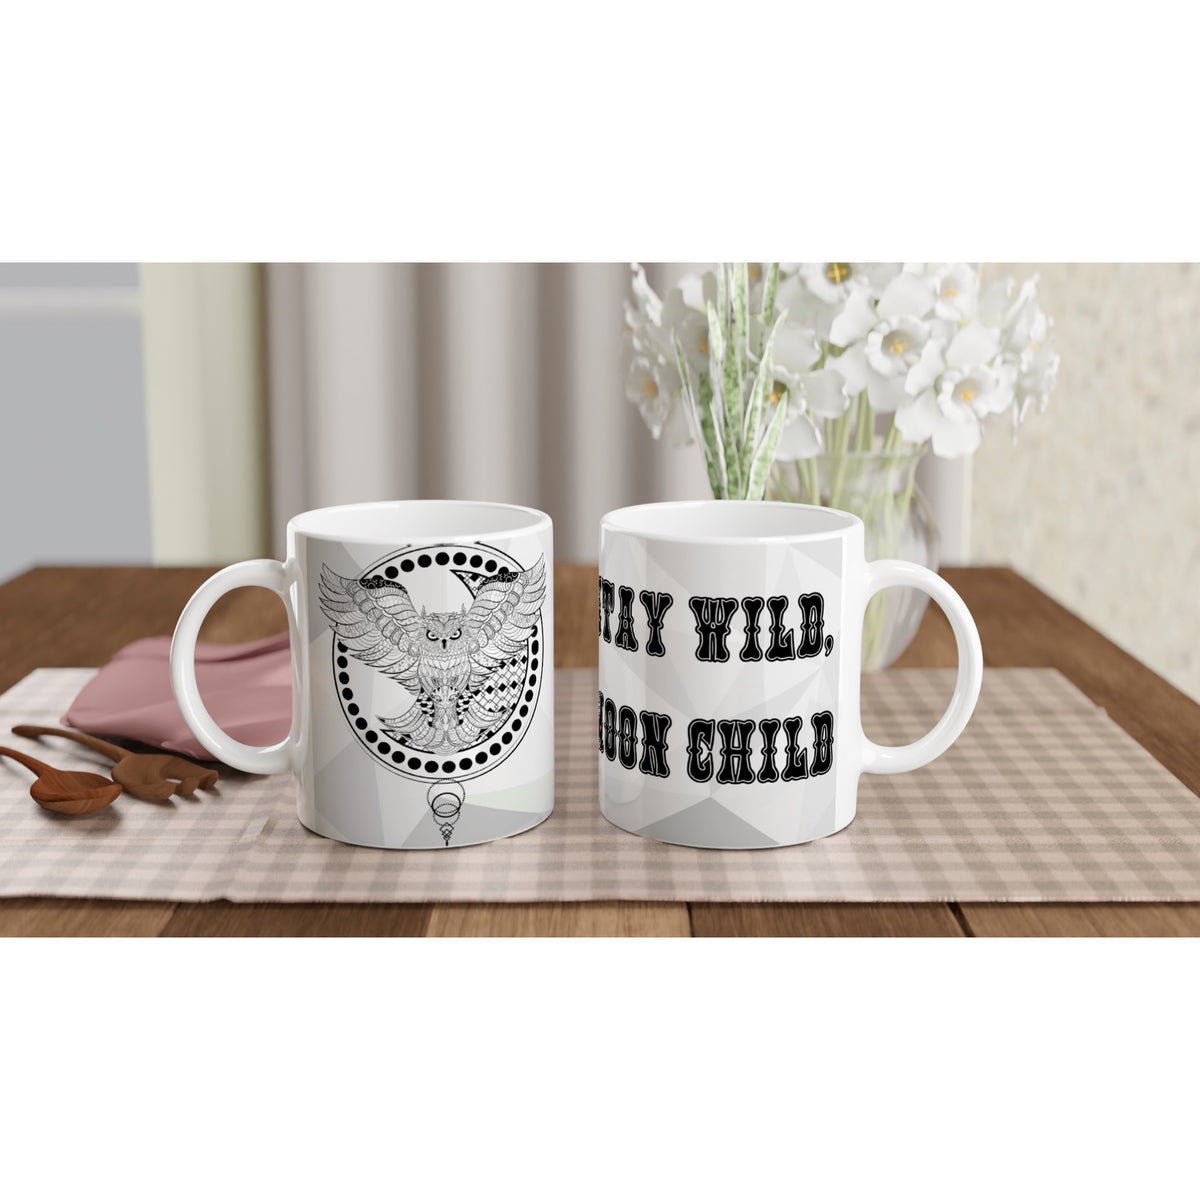 Stay Wild Moon Child- Owl Mug